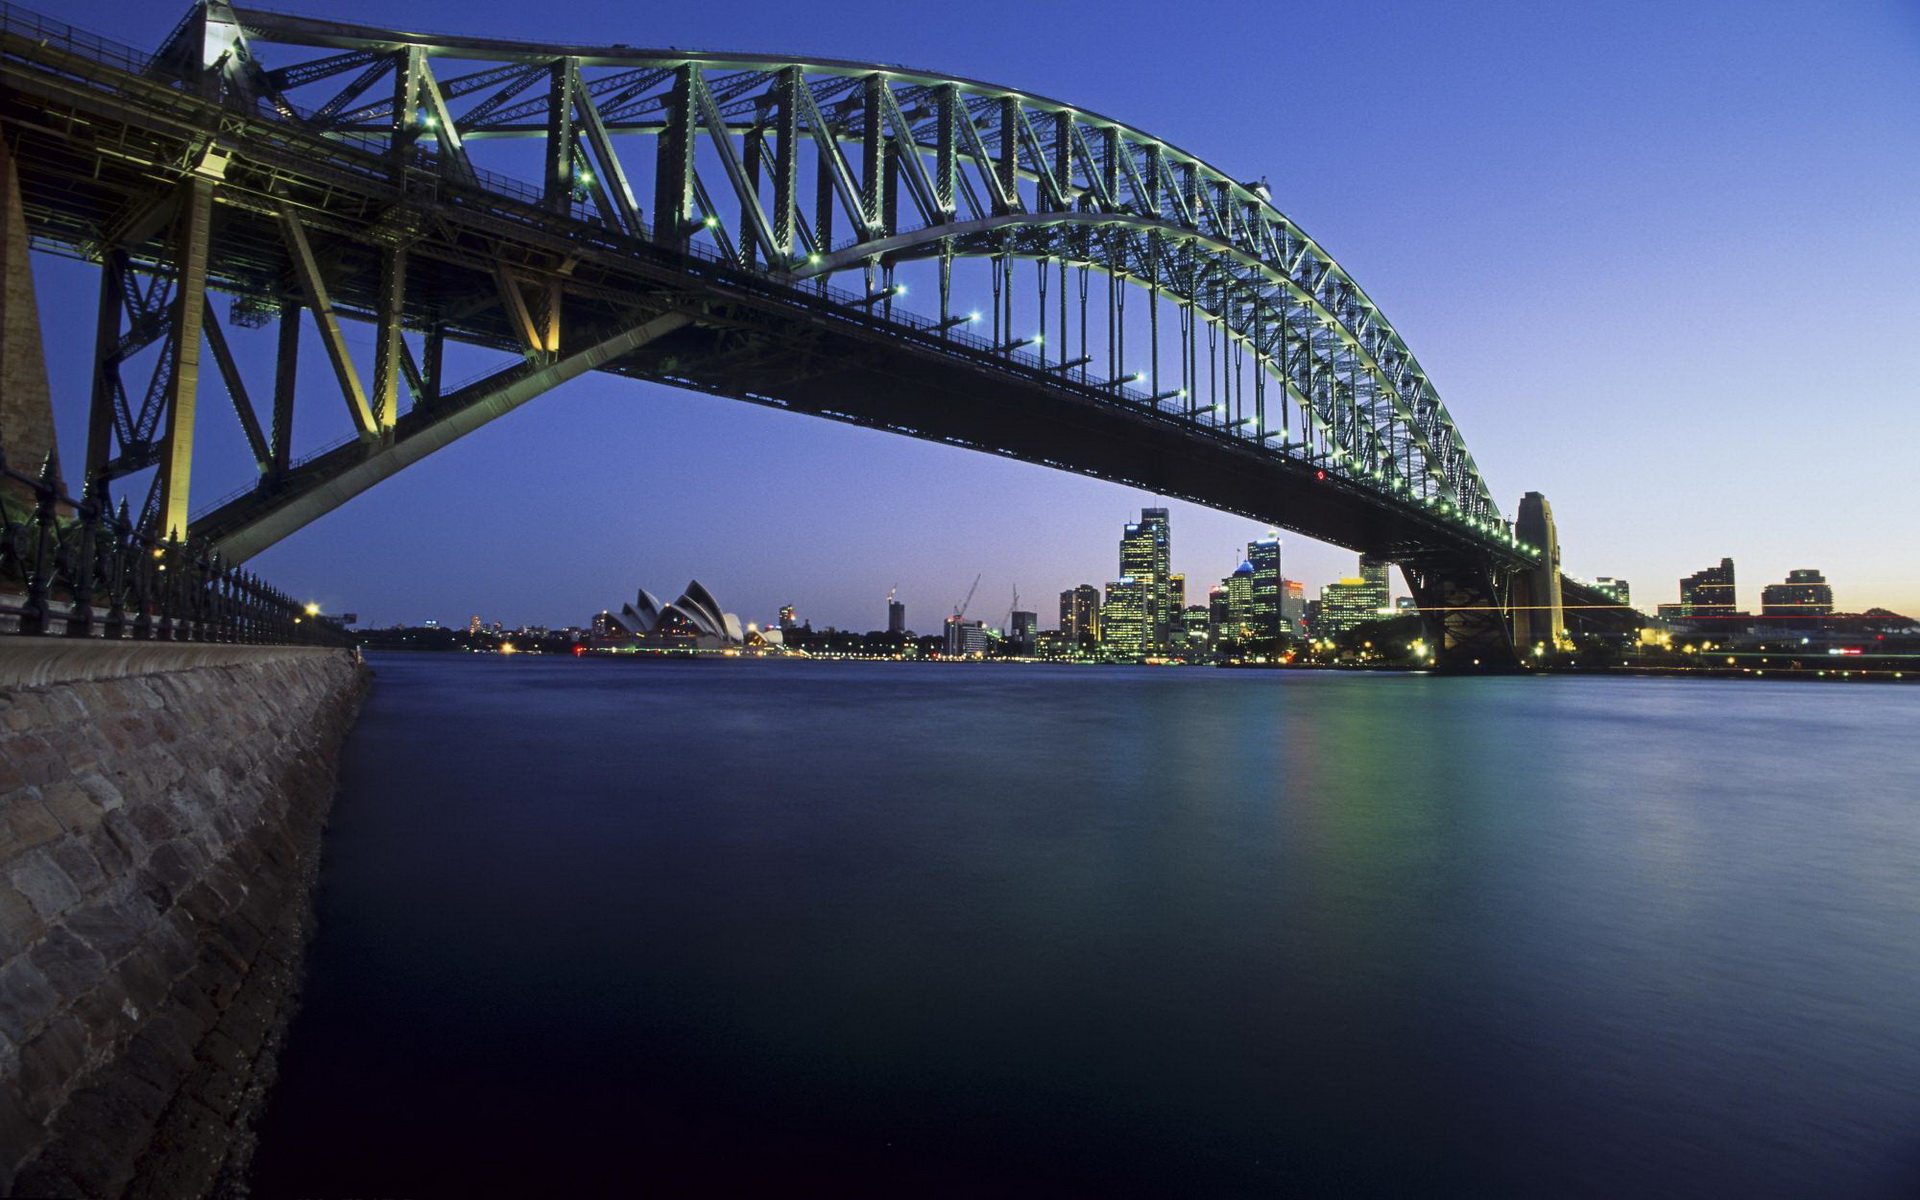 Harbour bridge. Харбор-бридж Сидней. Сиднейский мост Харбор-бридж. Харбор-бридж (Сидней, Австралия). Мост Харбор бридж в Австралии.